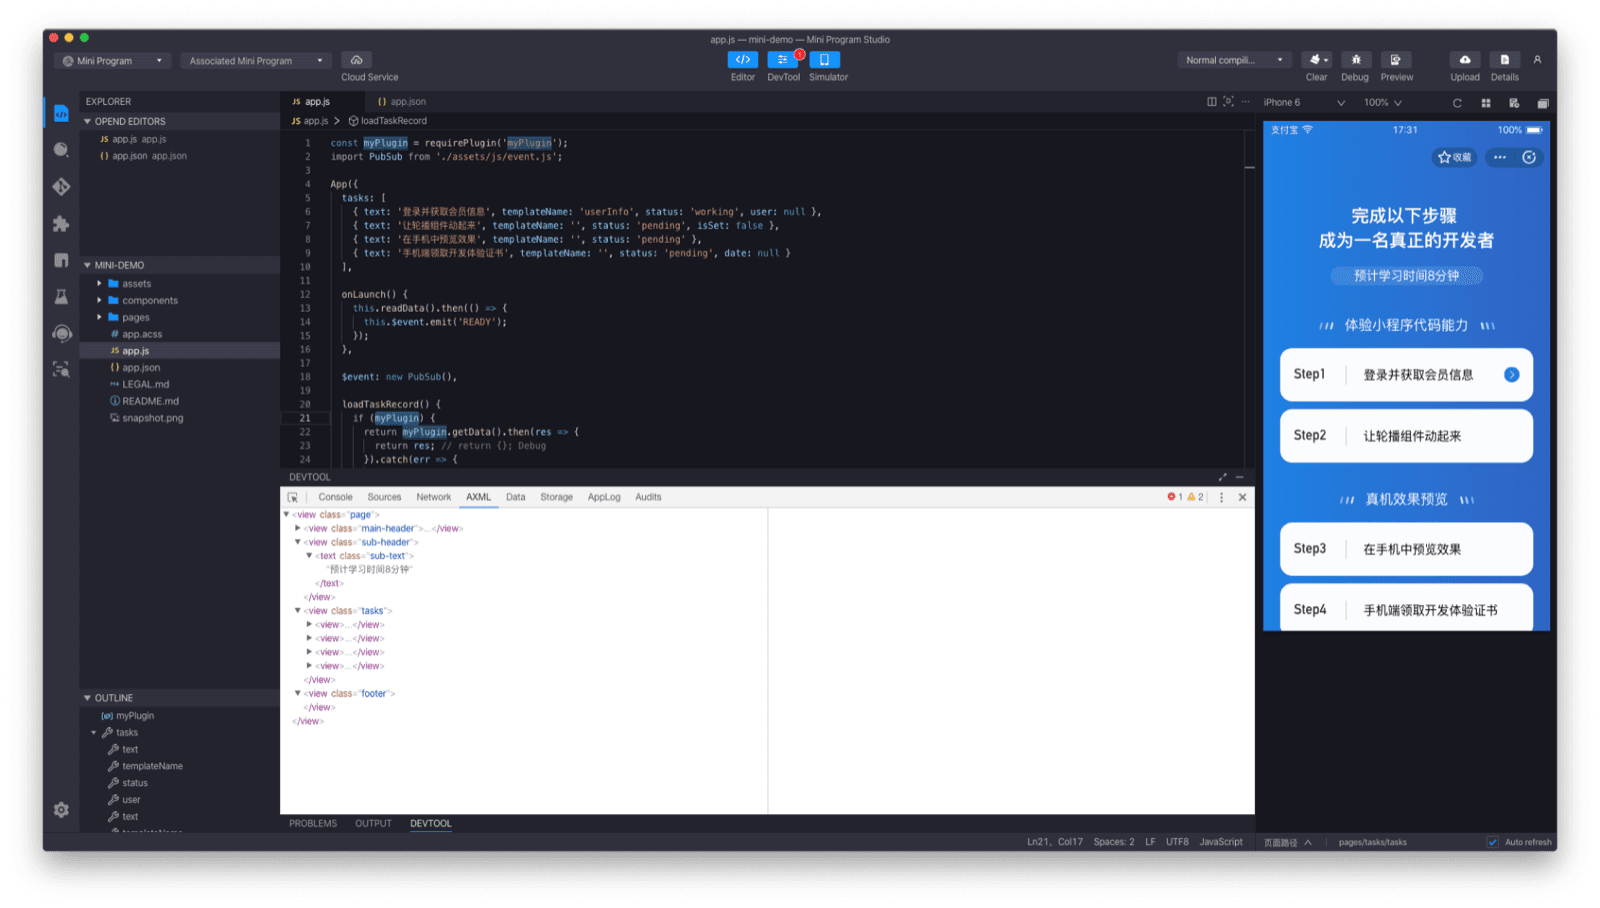 Alipay DevTools application window showing code editor, simulator, and debugger.